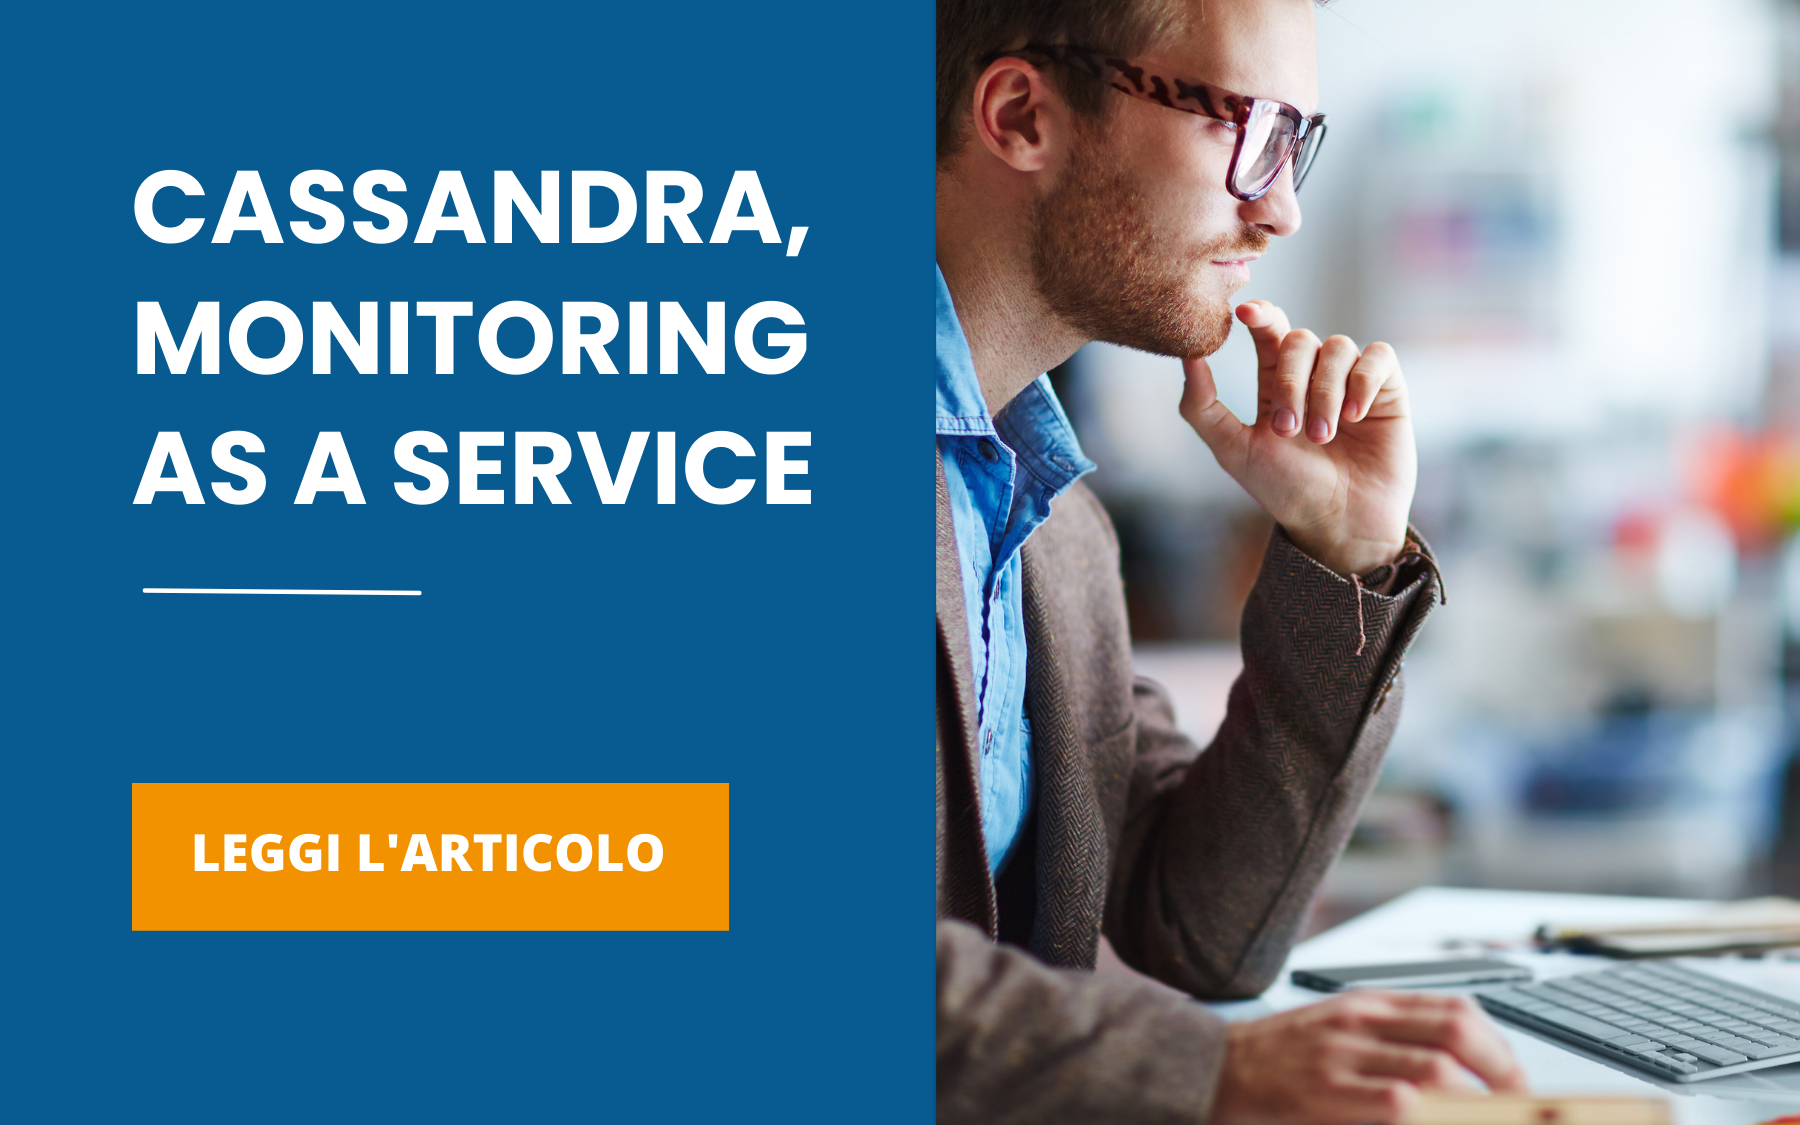 Cassandra, Monitoring as a Service